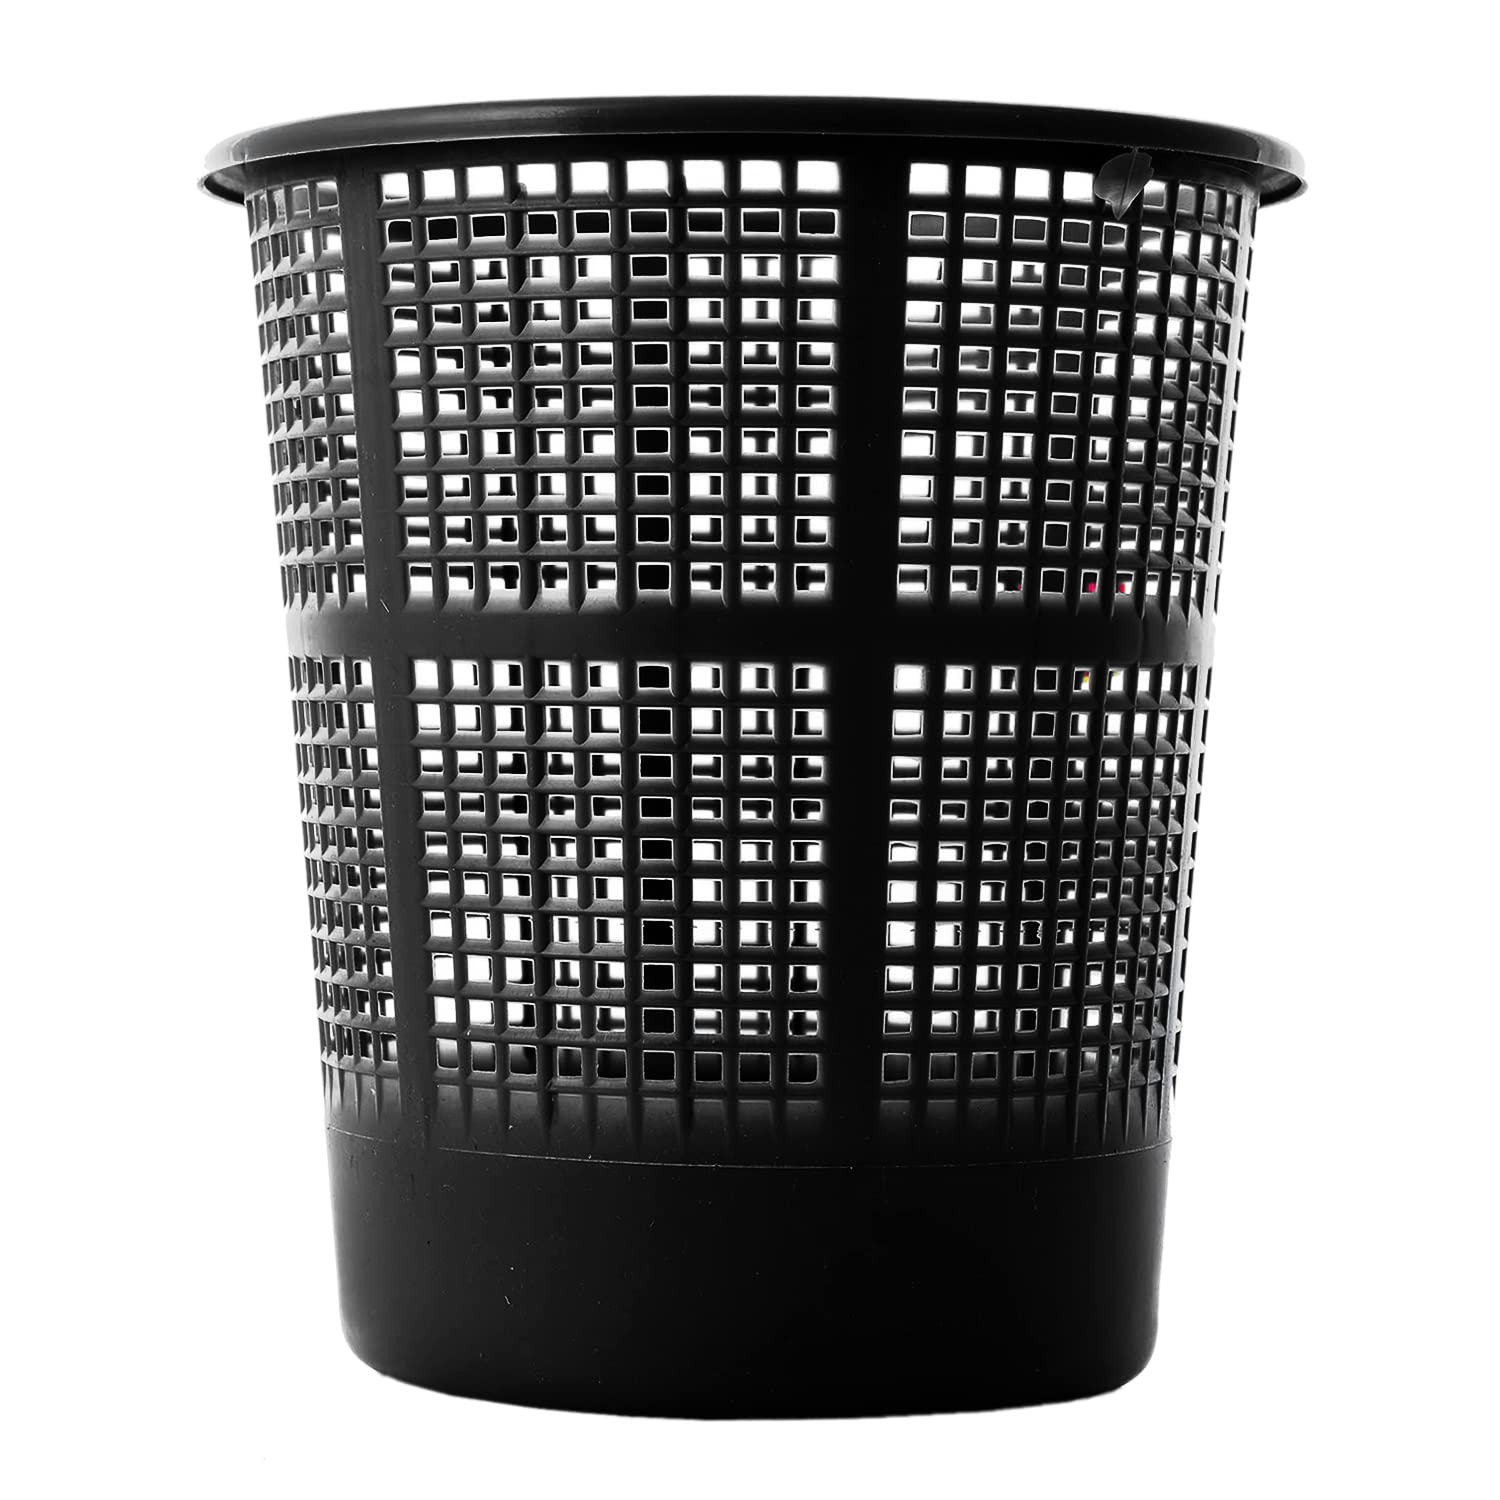 Kuber Industries Mesh Design Plastic Dustbin/Garbage Bin, 5Ltr.- Pack of 2 (Black & White)-47KM0790